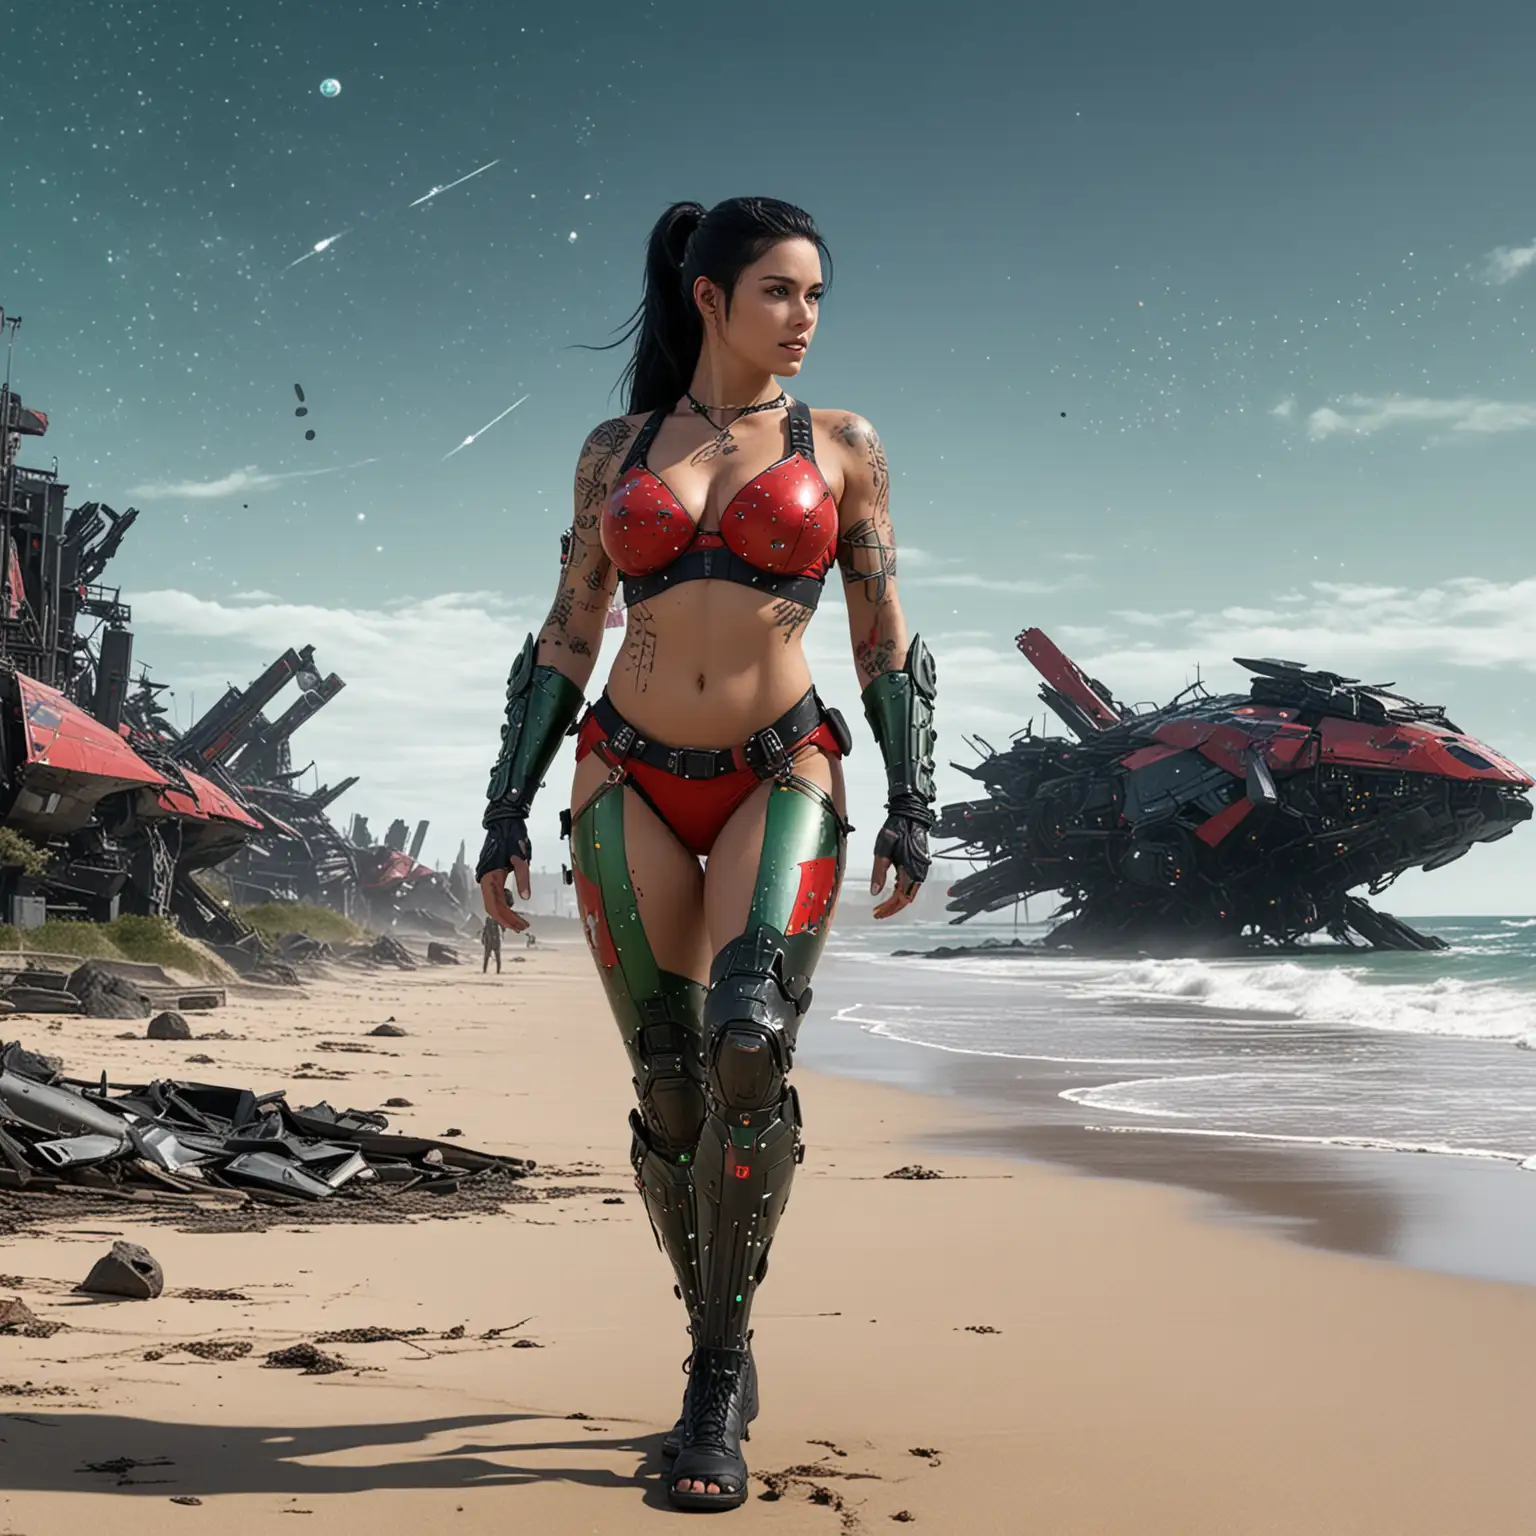 Futuristic Beach Stroll Female Warrior in HighTech Armor